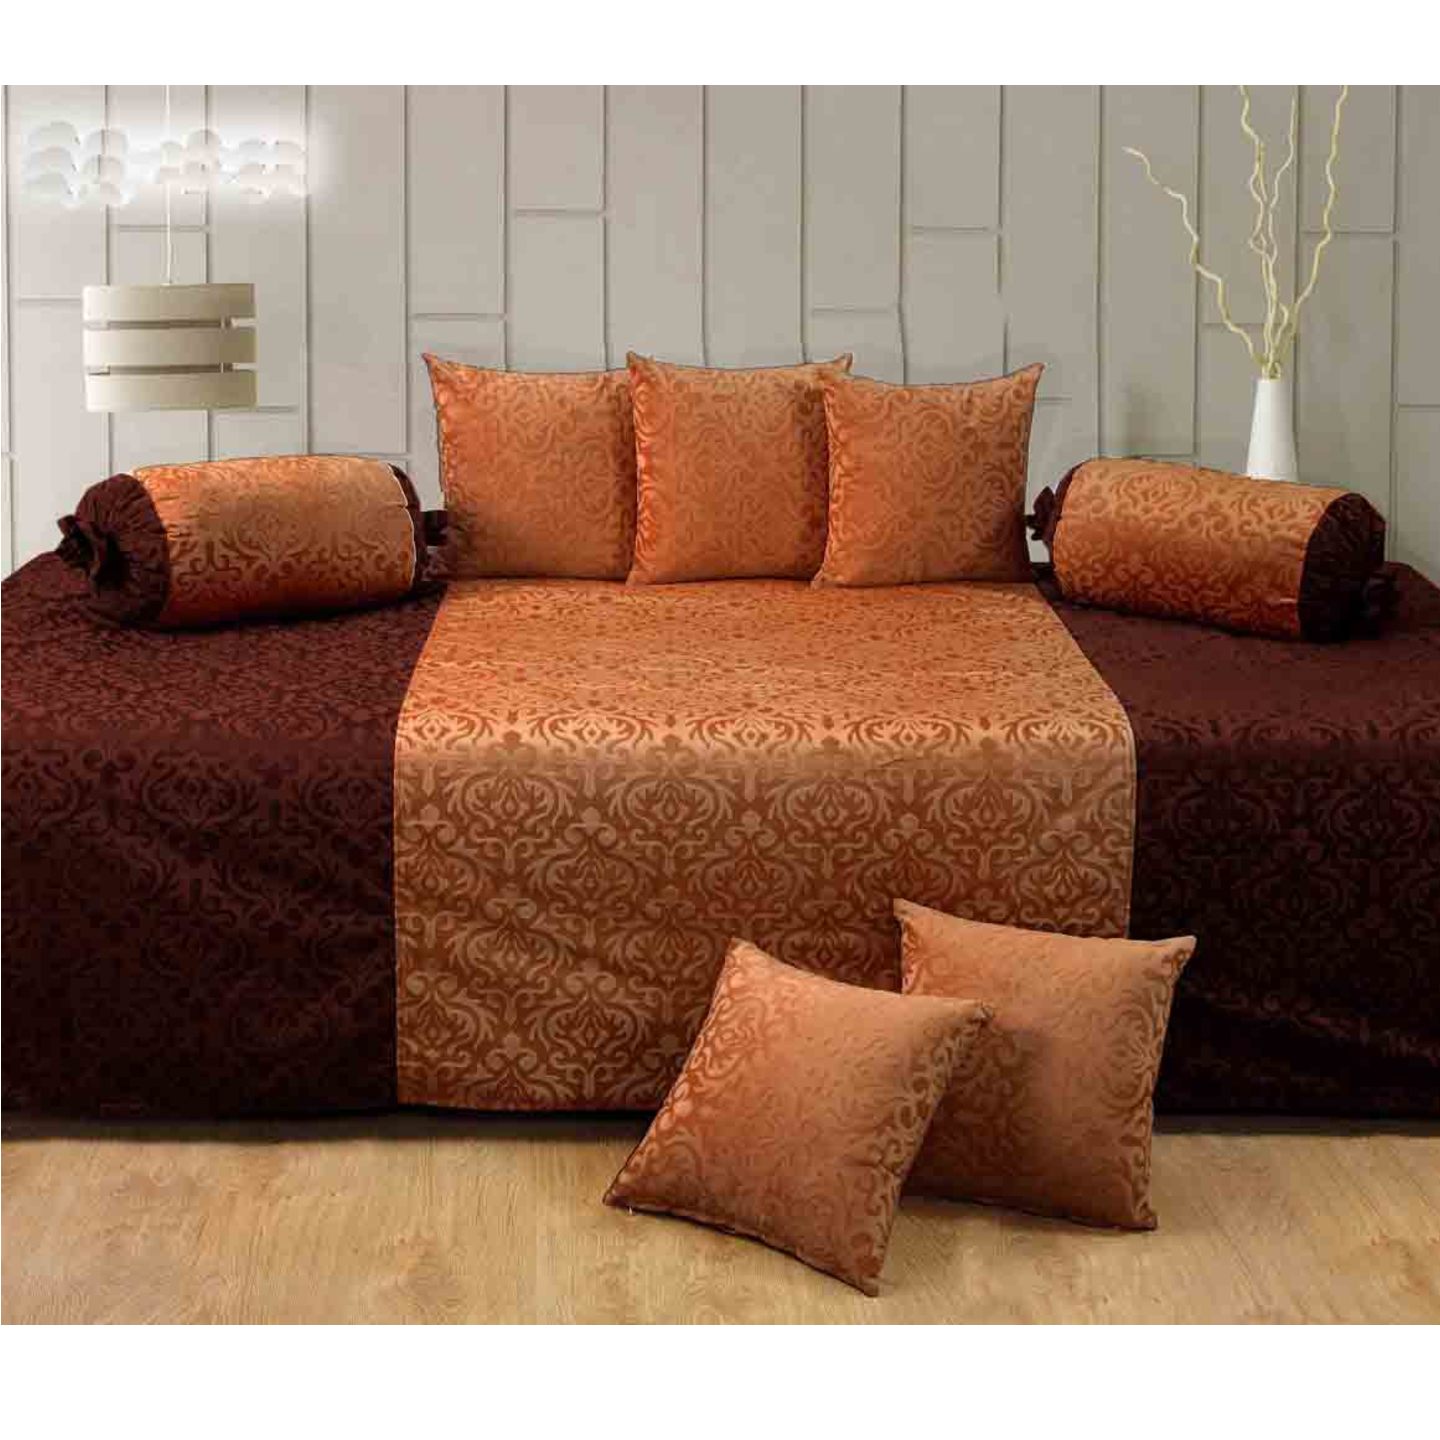 Velvet Diwan Setcontent 1 Single Bed Sheet, 5 Cushion Cover, 2 Bolster, Total - 8 Pcs Set, Exclusive Design